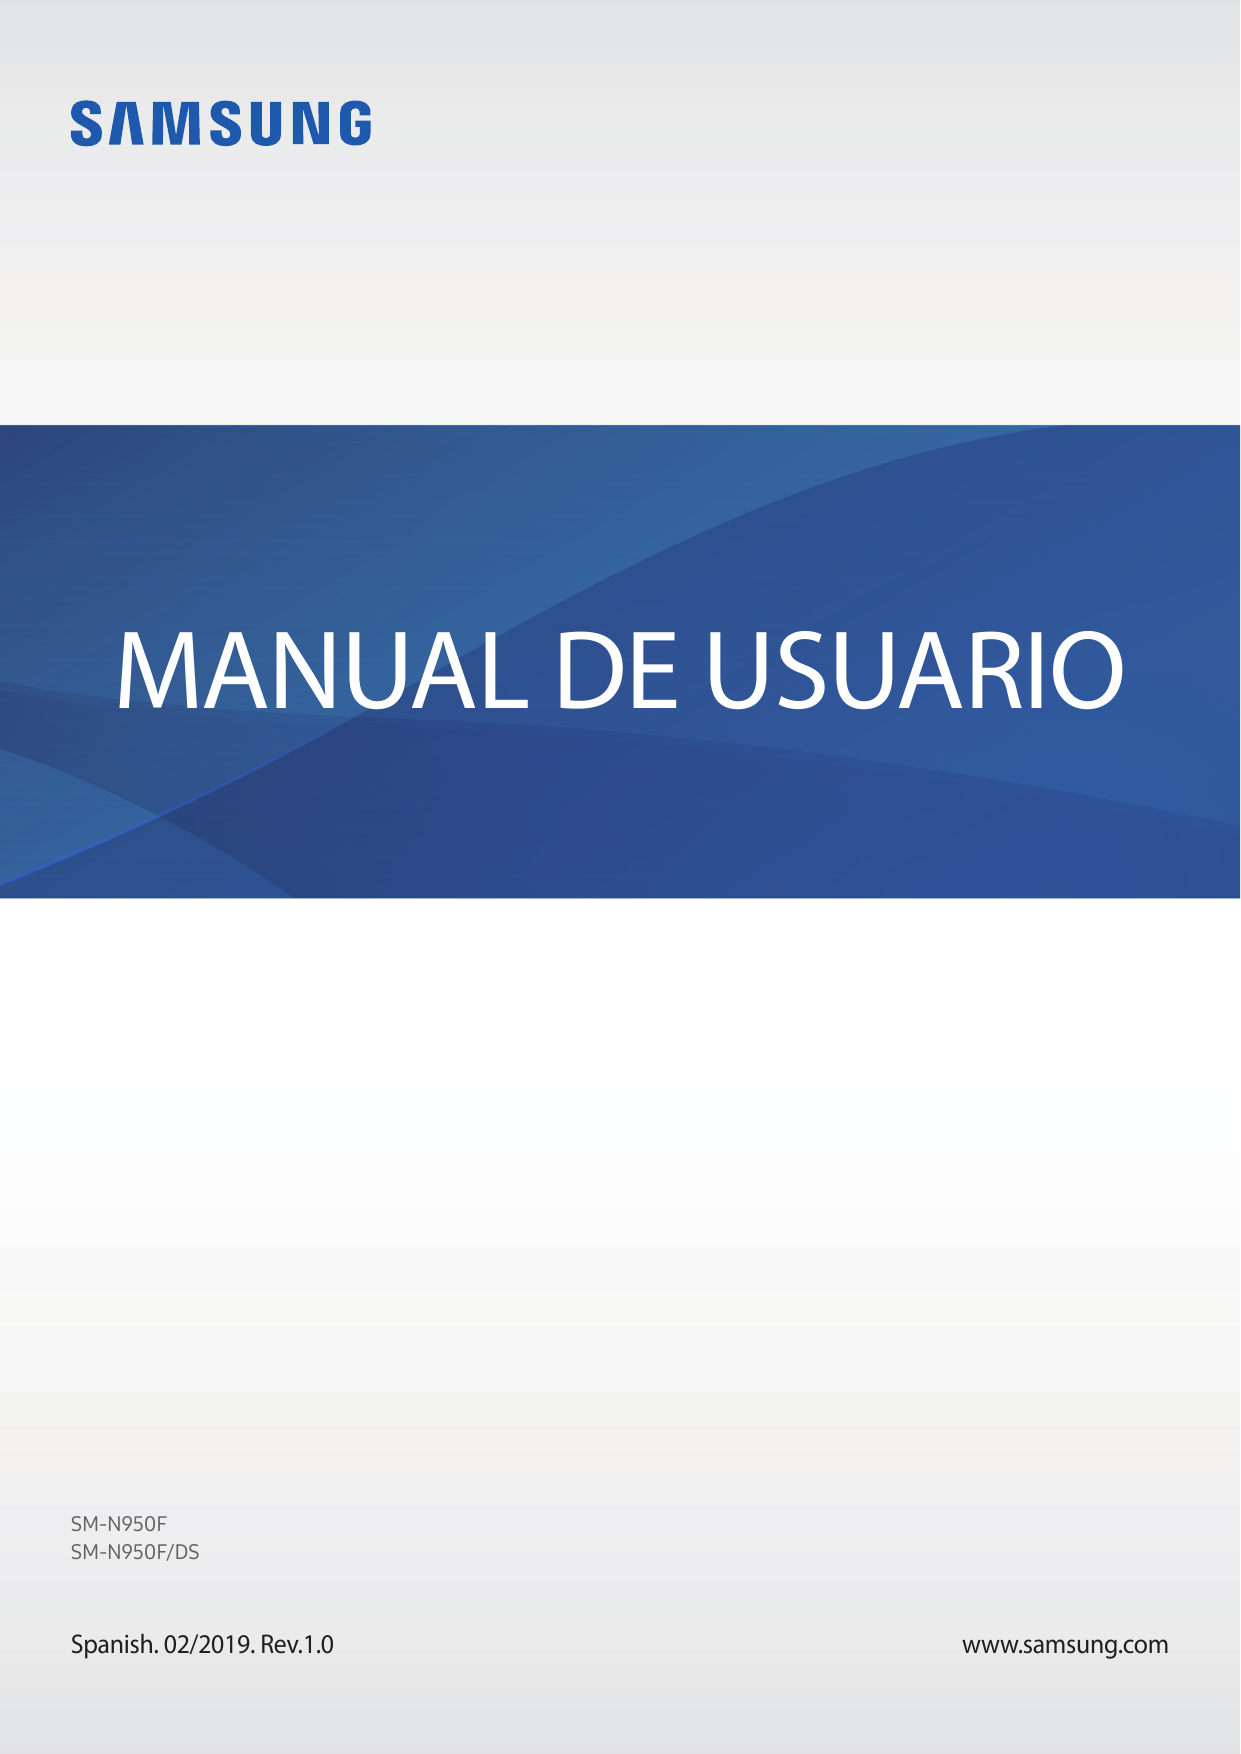 MANUAL DE USUARIOSM-N950FSM-N950F/DSSpanish. 02/2019. Rev.1.0www.samsung.com